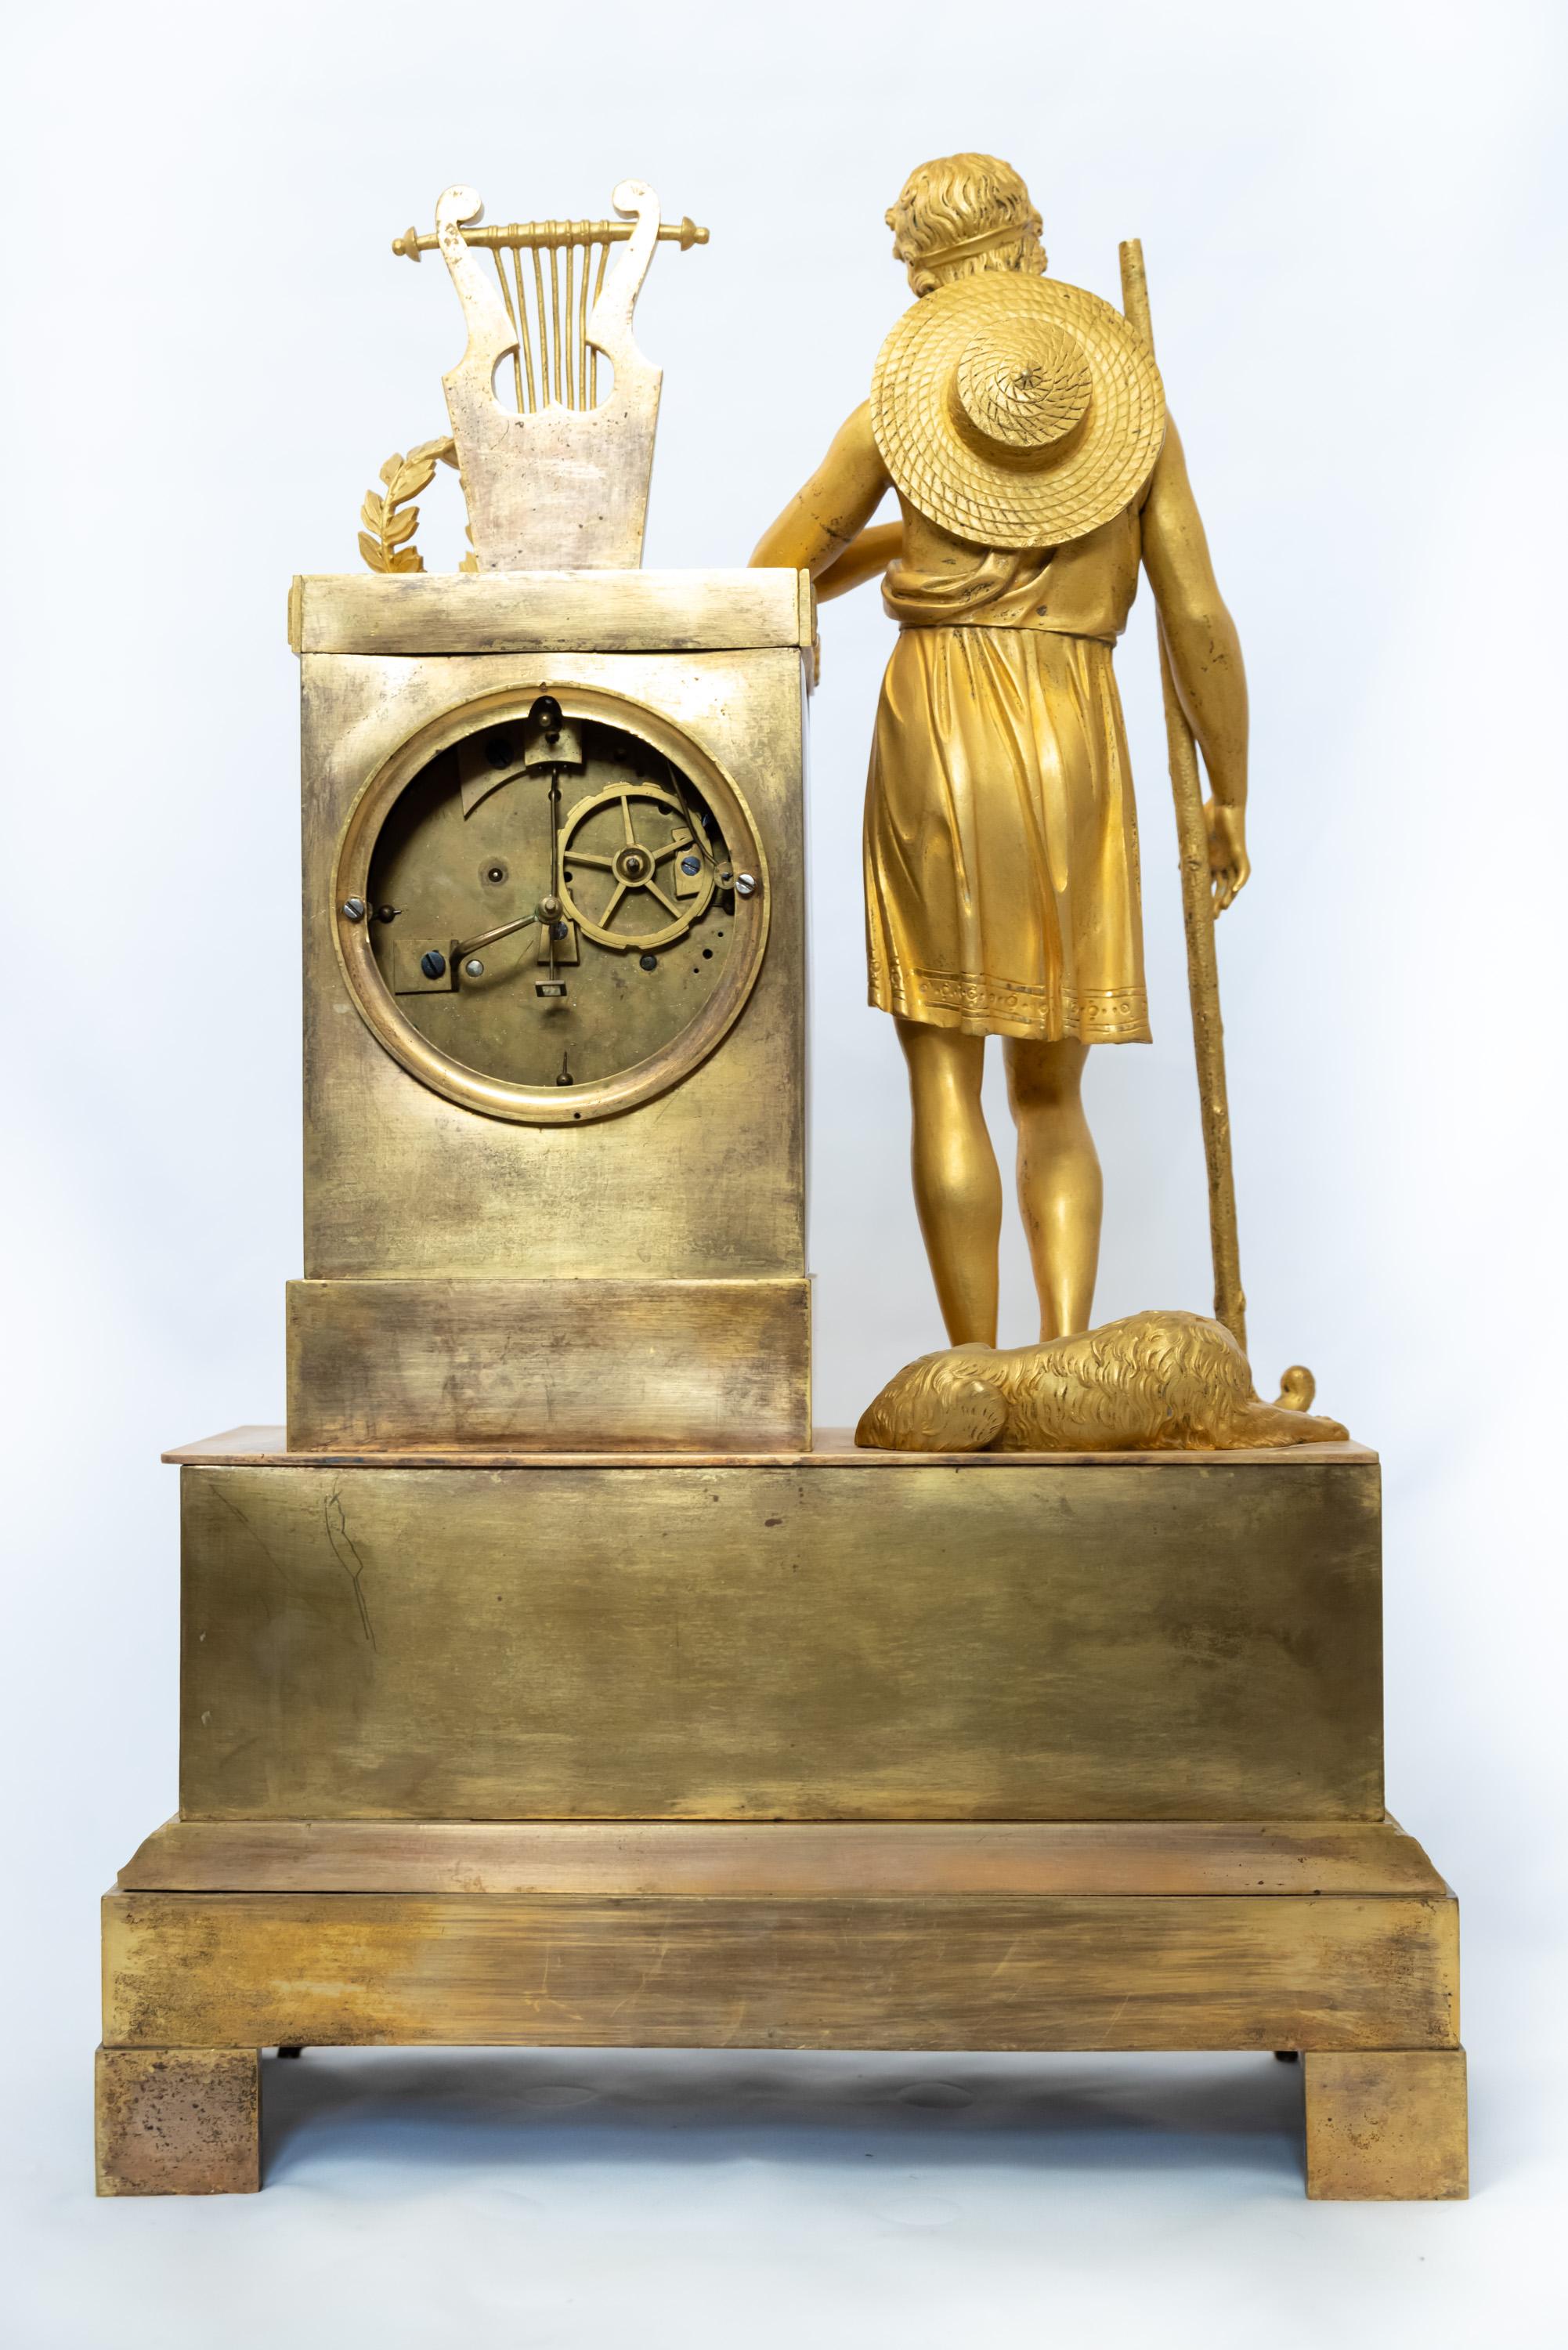 19th Century A French Fire-Gilt Bronze Restauration-Era Clock Featuring the “Shepherd Paris” For Sale